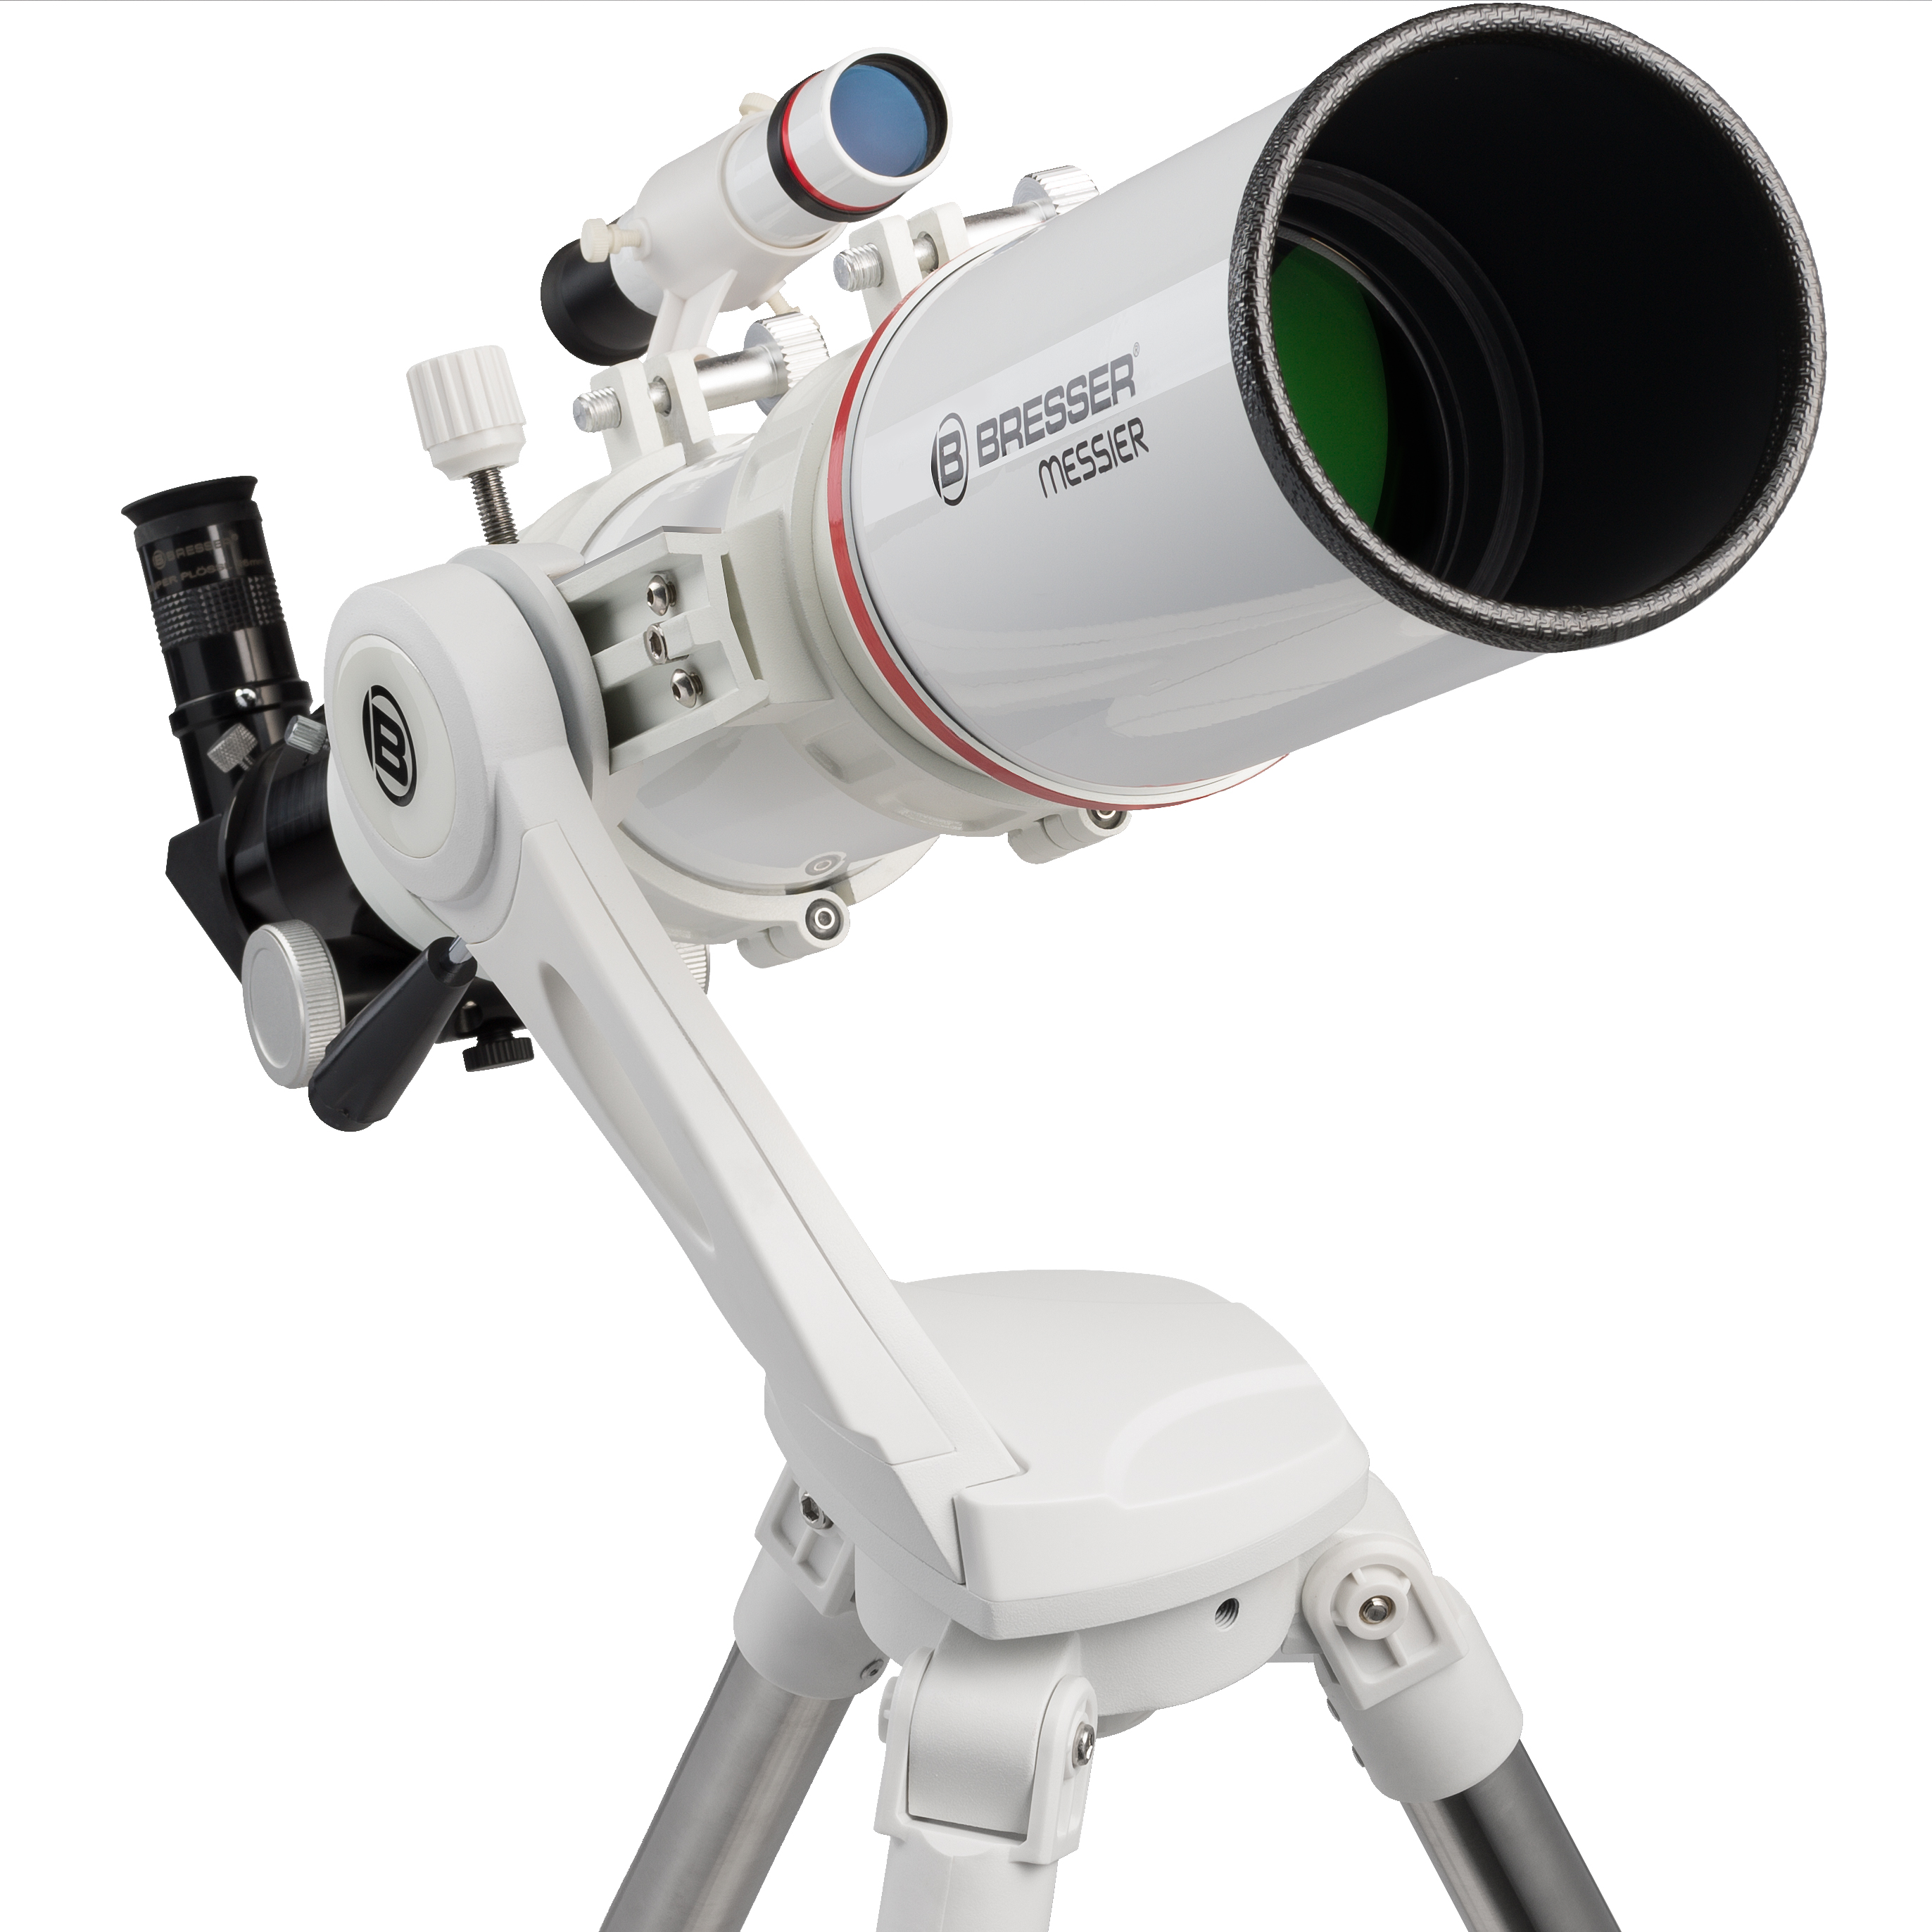 AR-102/600 Teleskop 102 mm, BRESSER Messier AZ 23, NANO